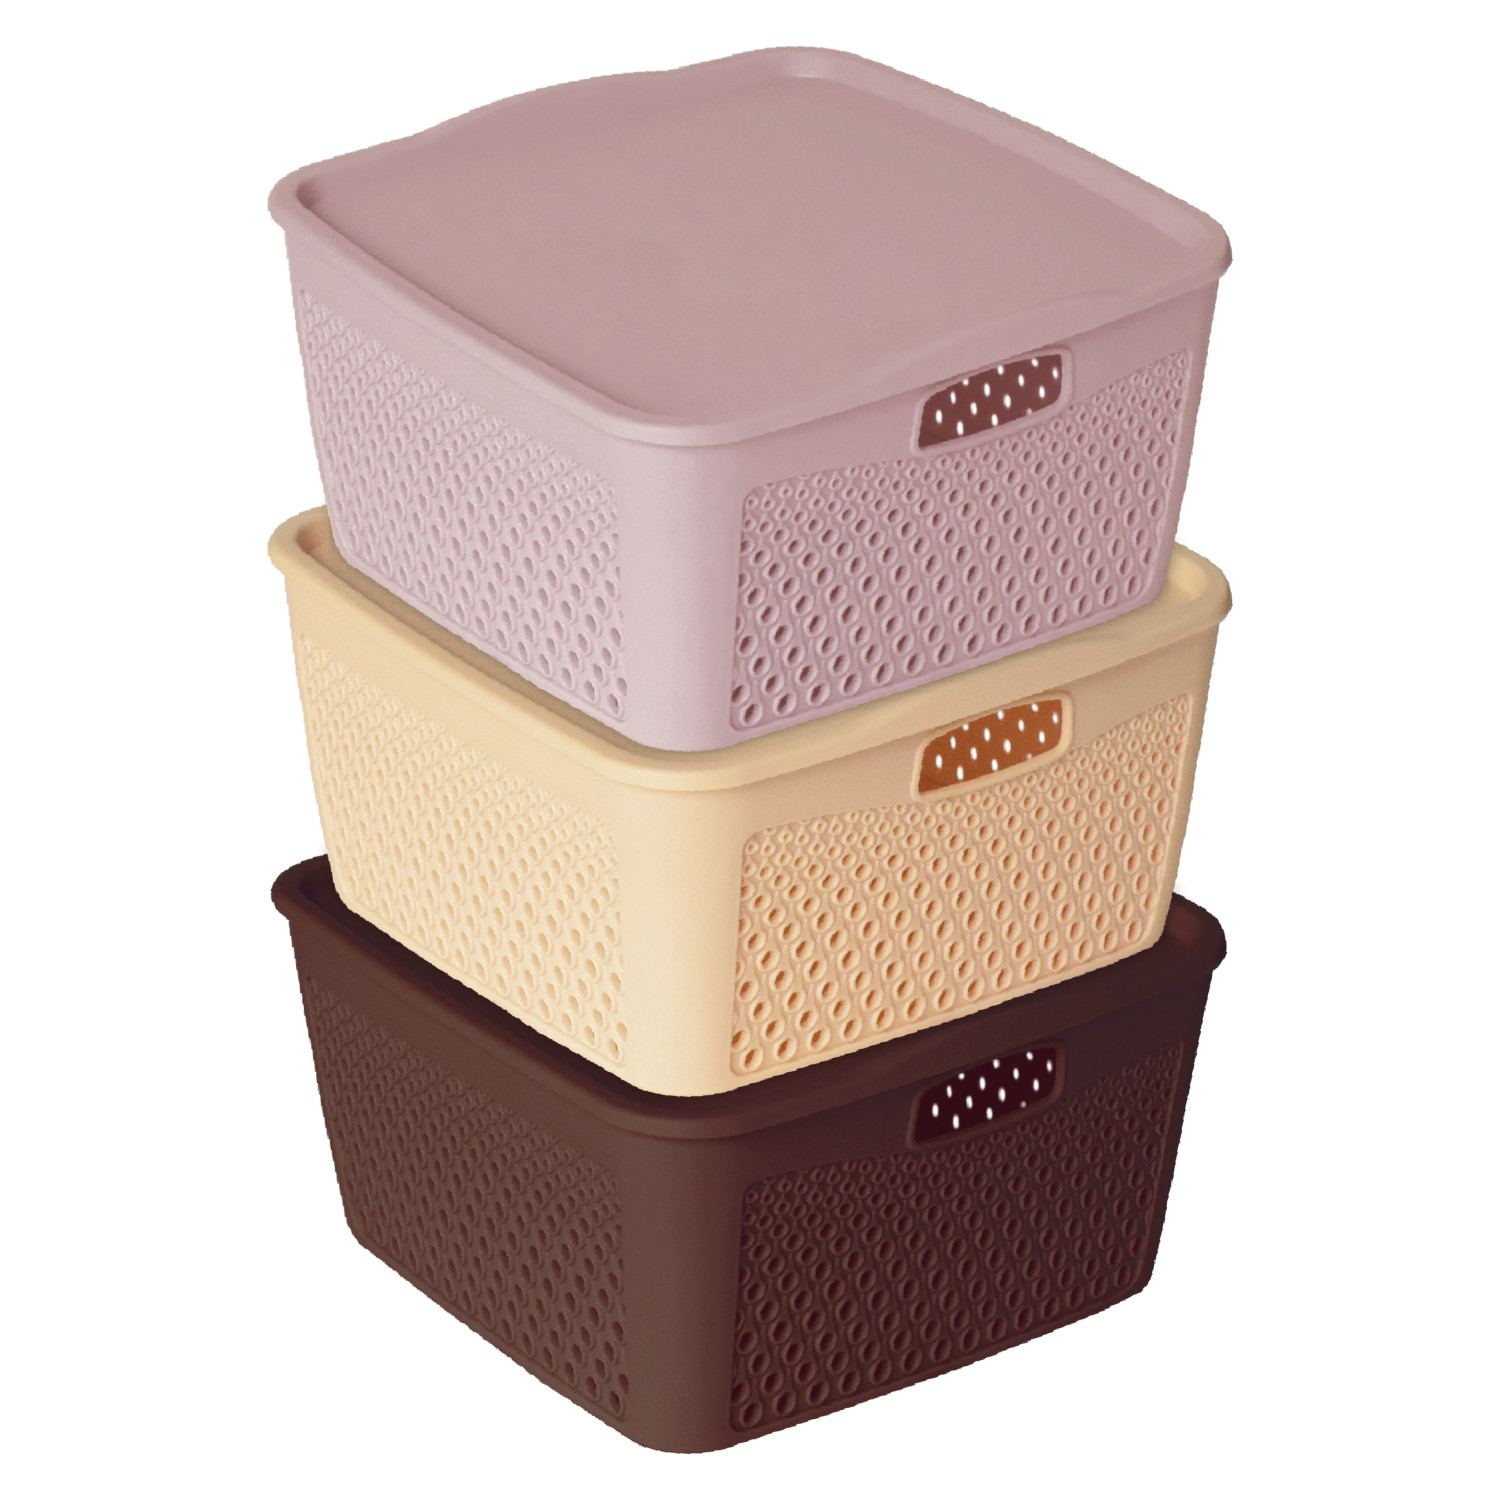 Kuber Industries Netted Design Unbreakable Multipurpose Square Shape Plastic Storage Baskets with lid Medium Pack of 3 (Brown, Beige, Grey)